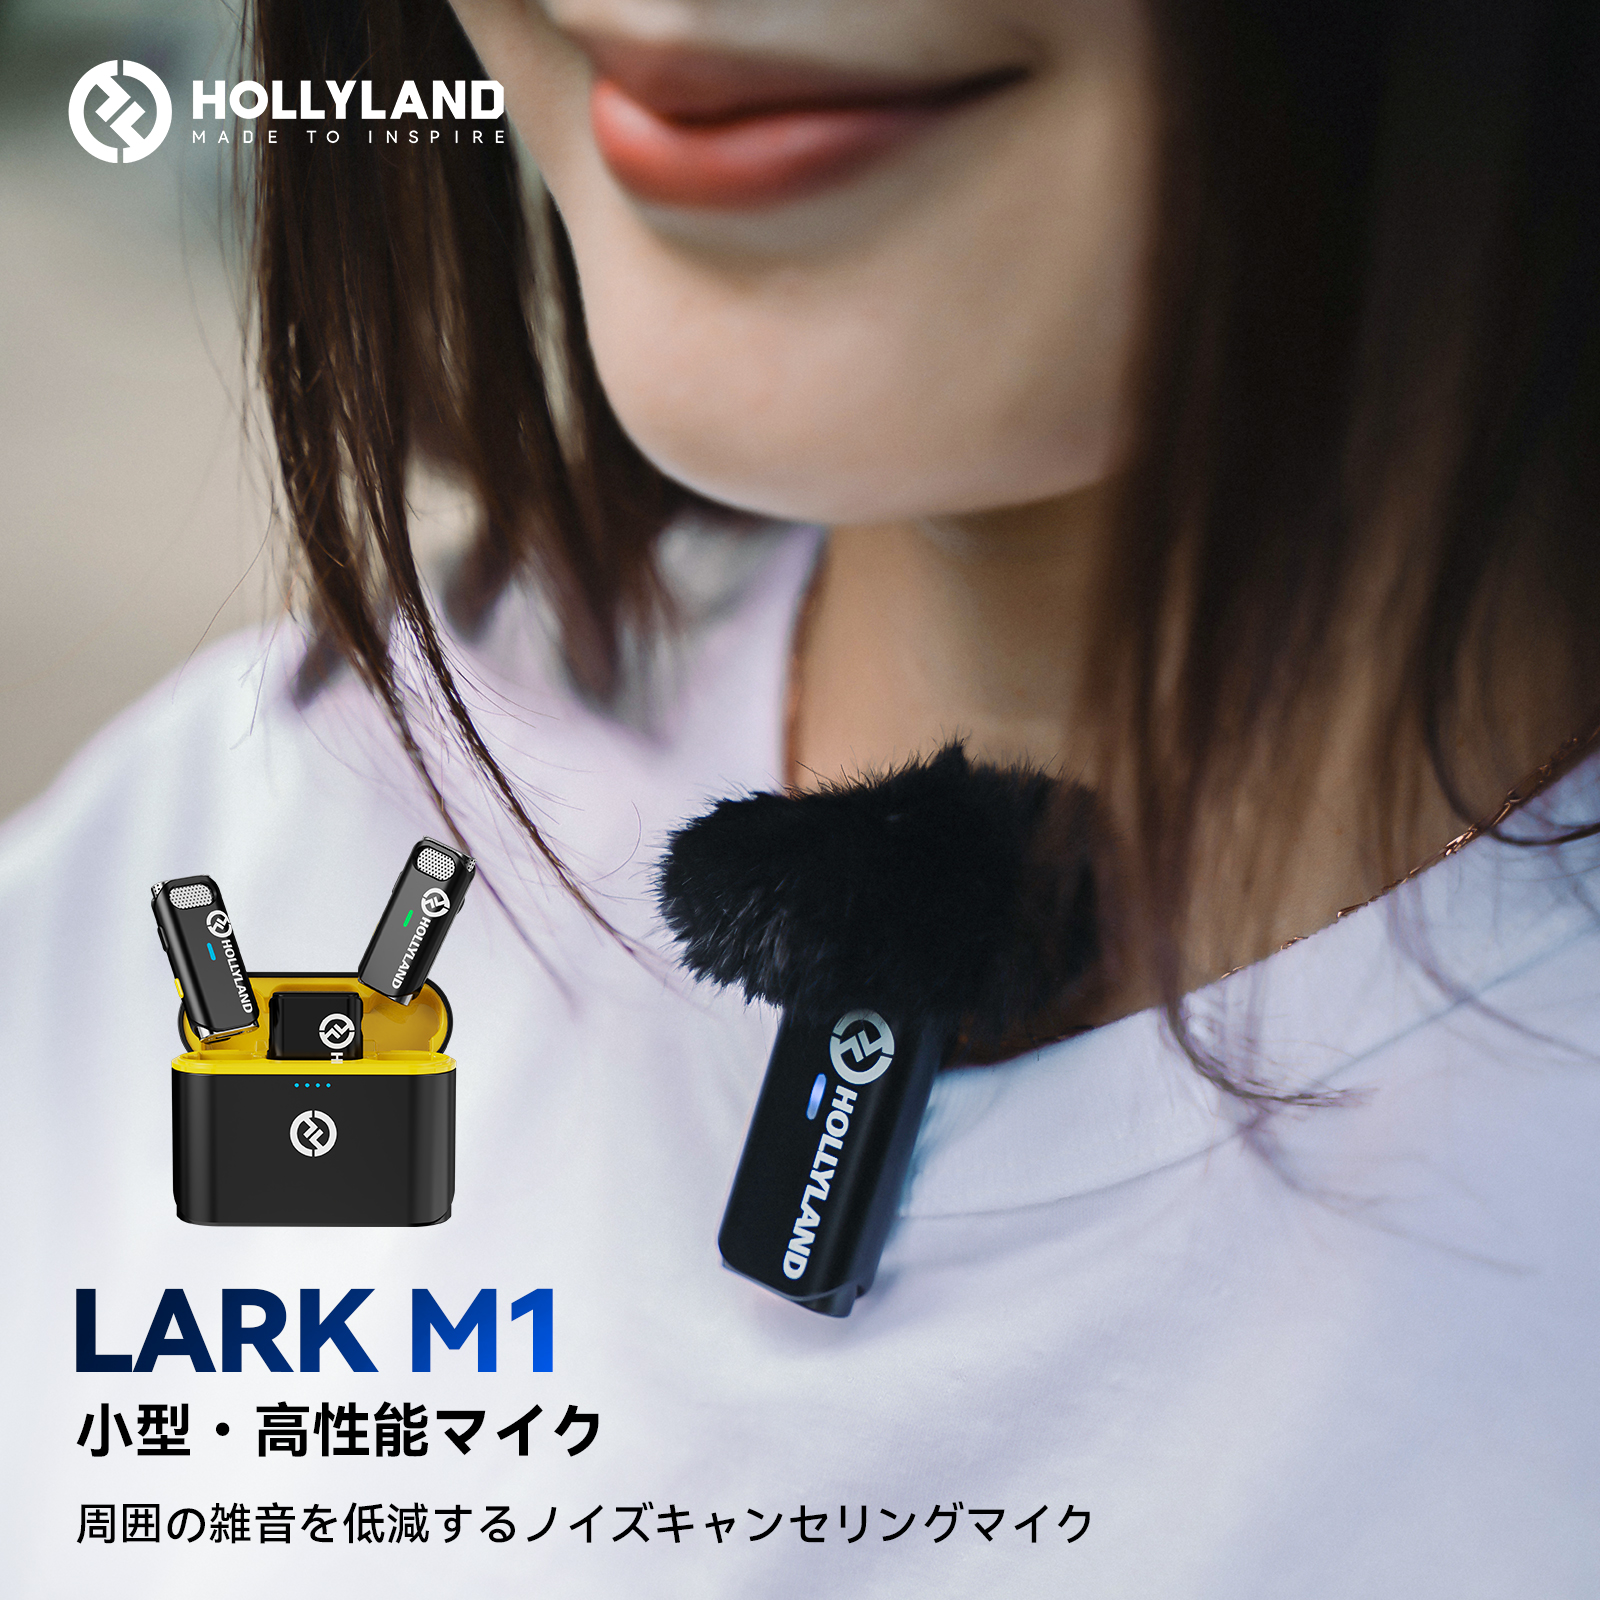 Hollyland Lark M1 ワイヤレスマイク収納充電ケース付き＆自動ペアリング ピンマイク ワイヤレス スマホ カメラ レコーダーなどに対応